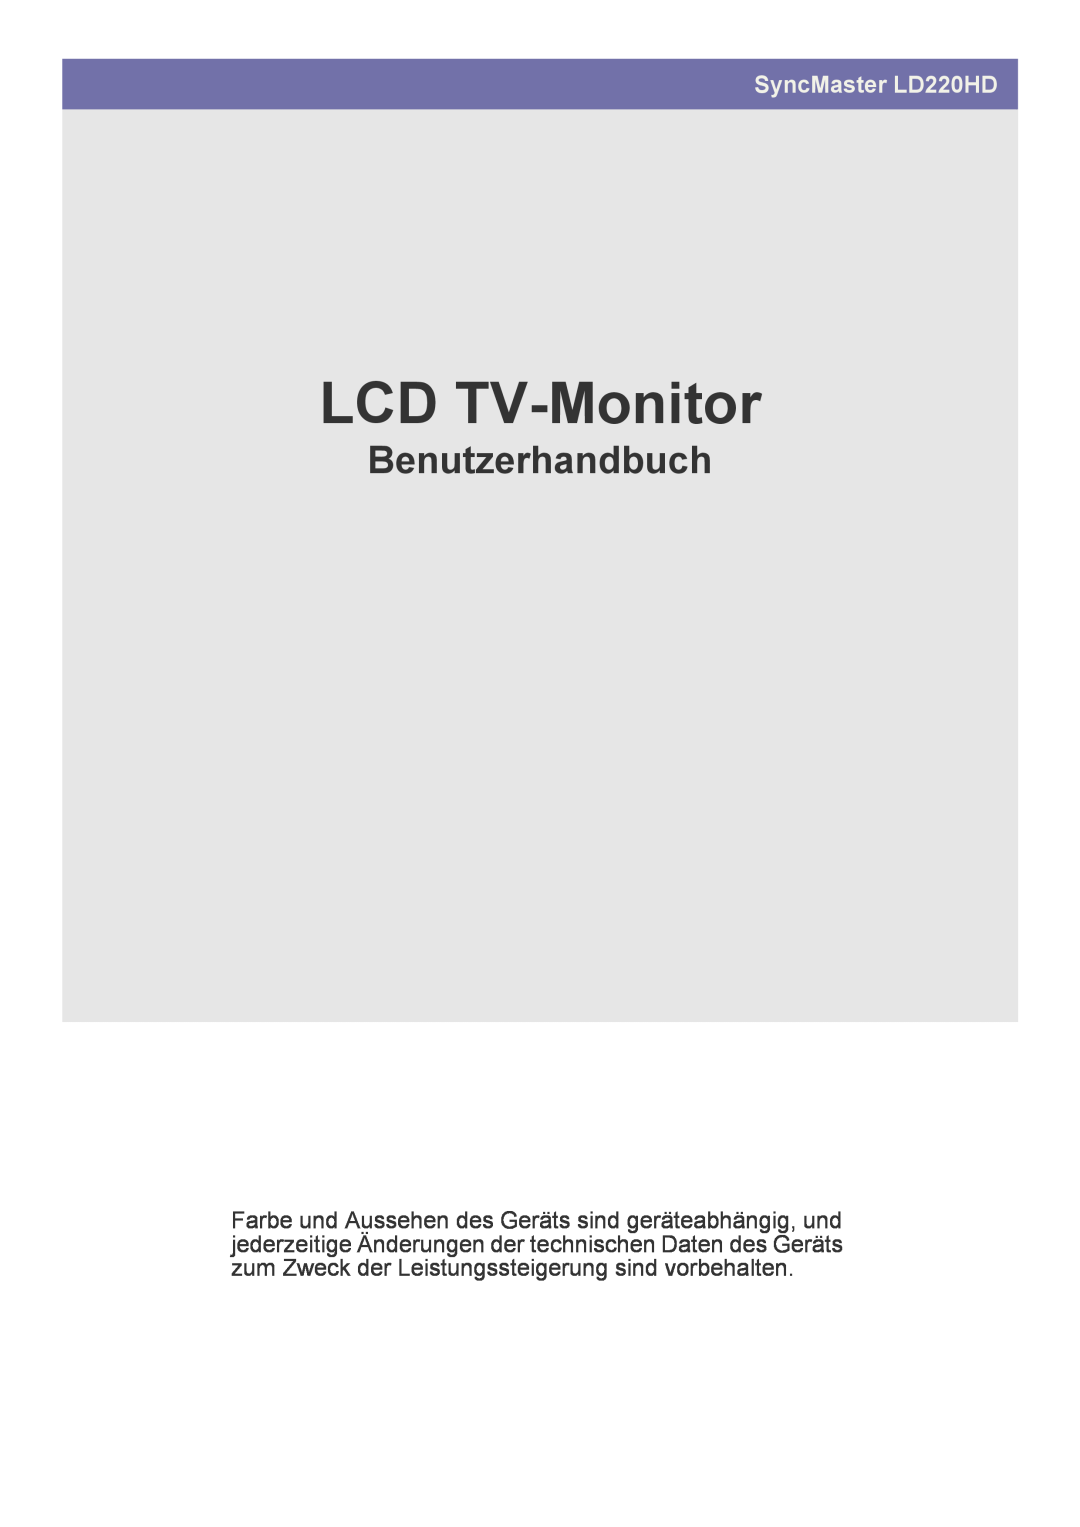 Samsung LS22FMDGF/EN manual LCD TV Monitoriaus, naudojimo instrukcijos, SyncMaster LD220HD 